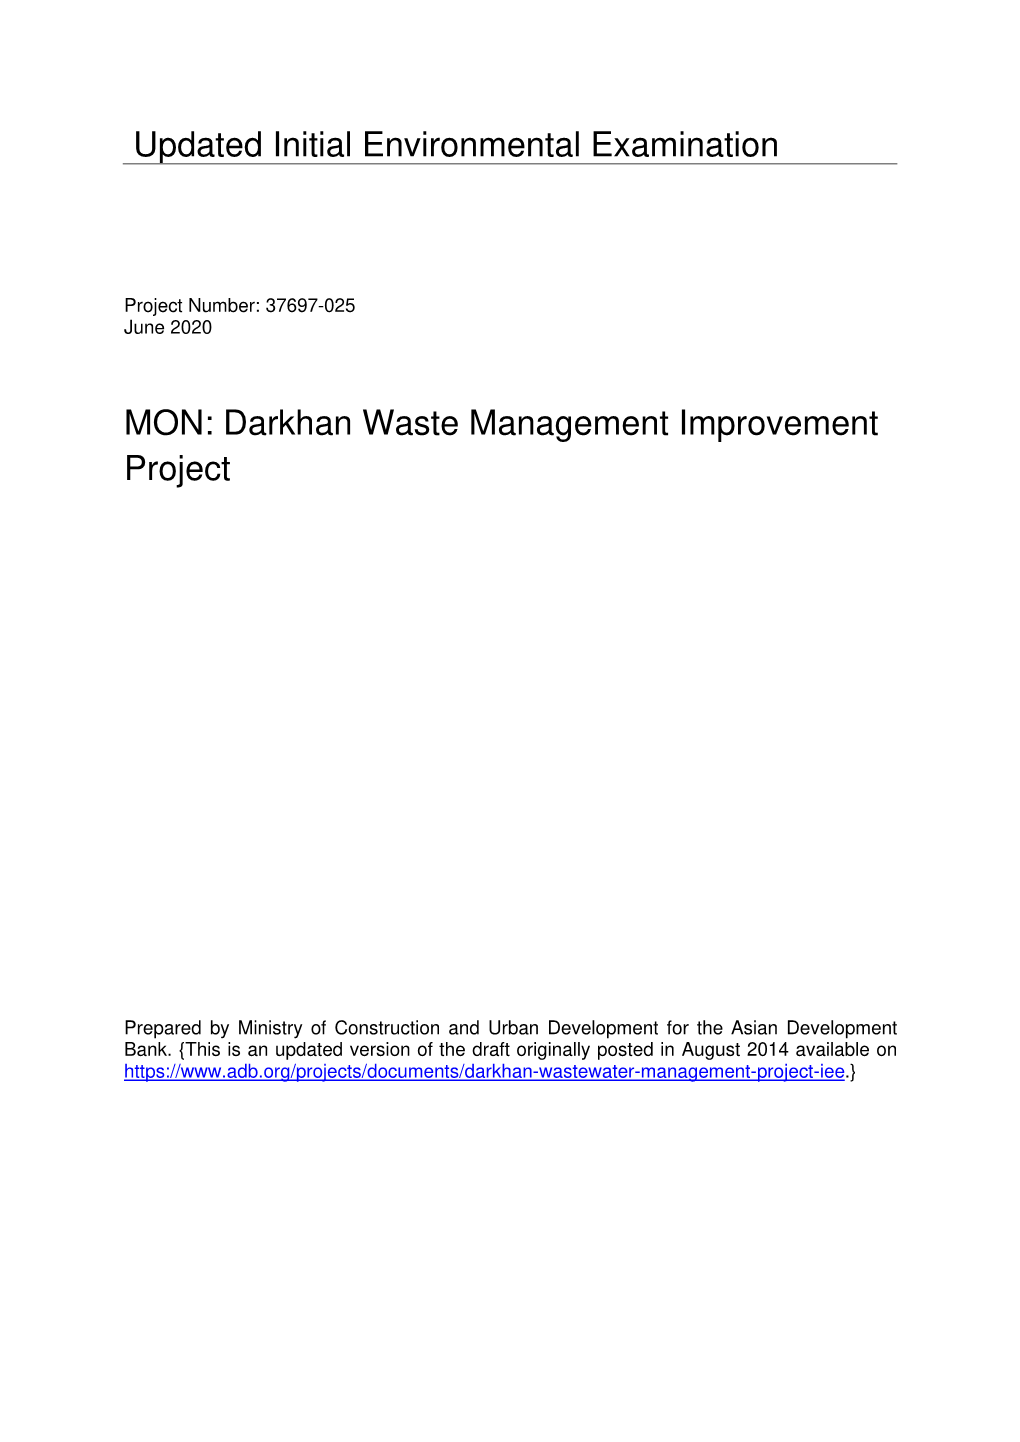 37697-025: Darkhan Wastewater Management Project